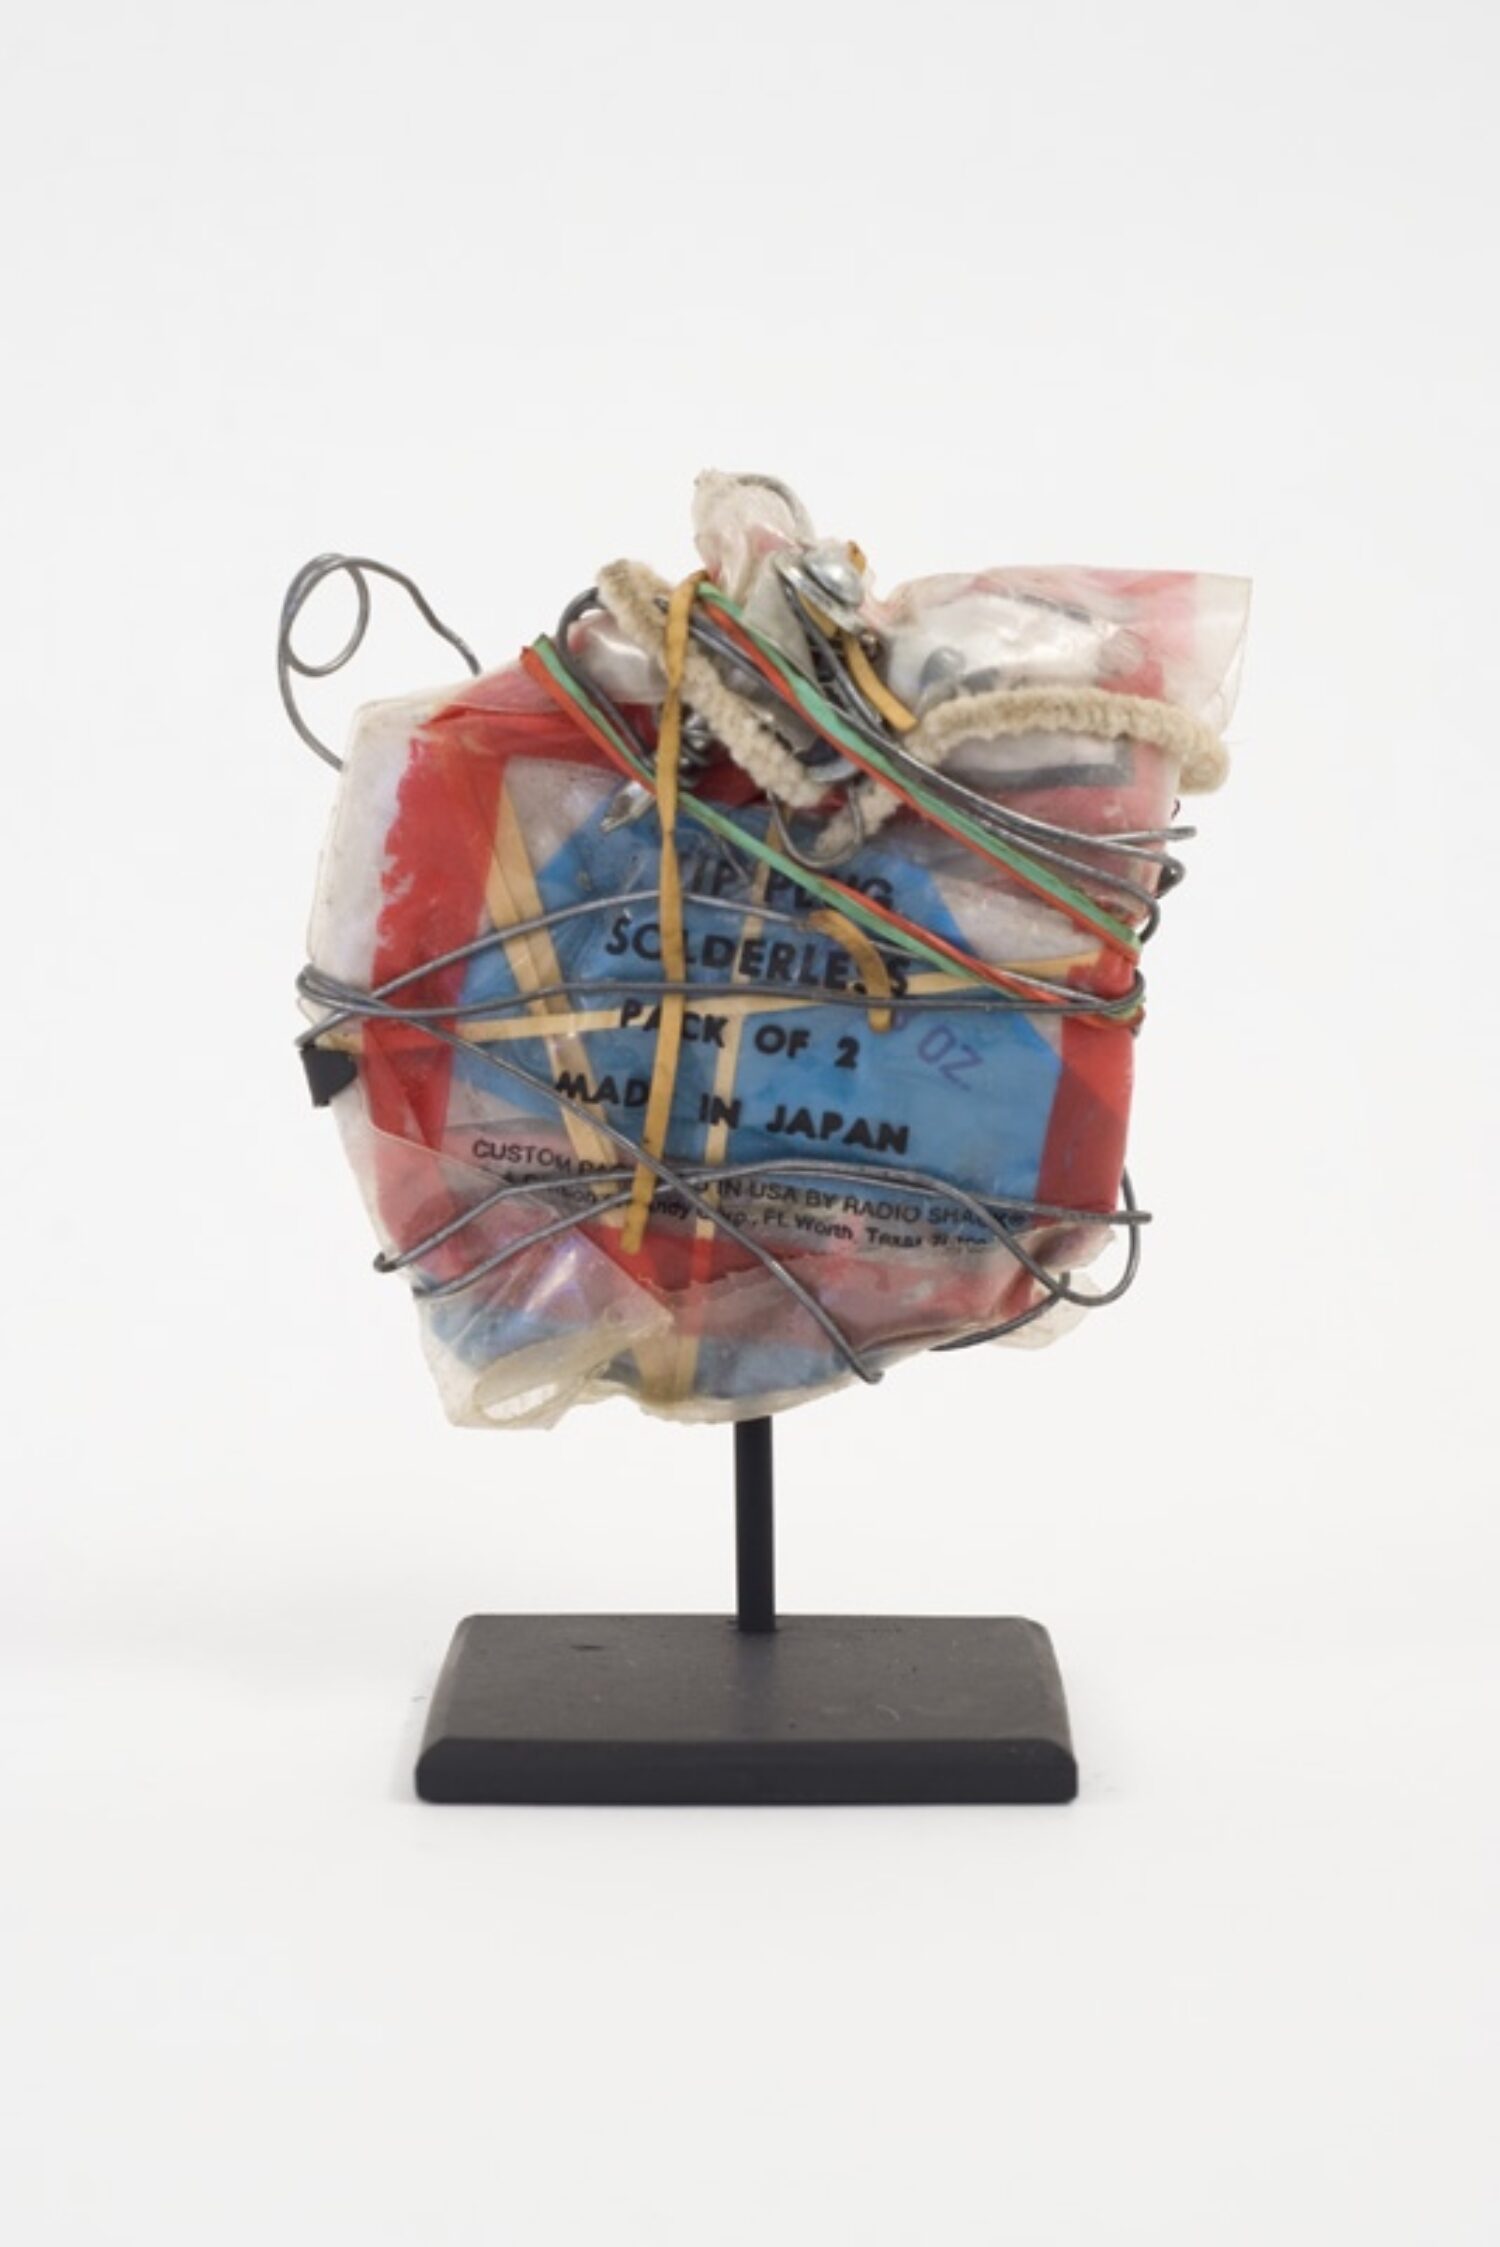 Philadelphia Wireman Untitled Wire Plastic Wrapper Rubberbands C 1970–1975